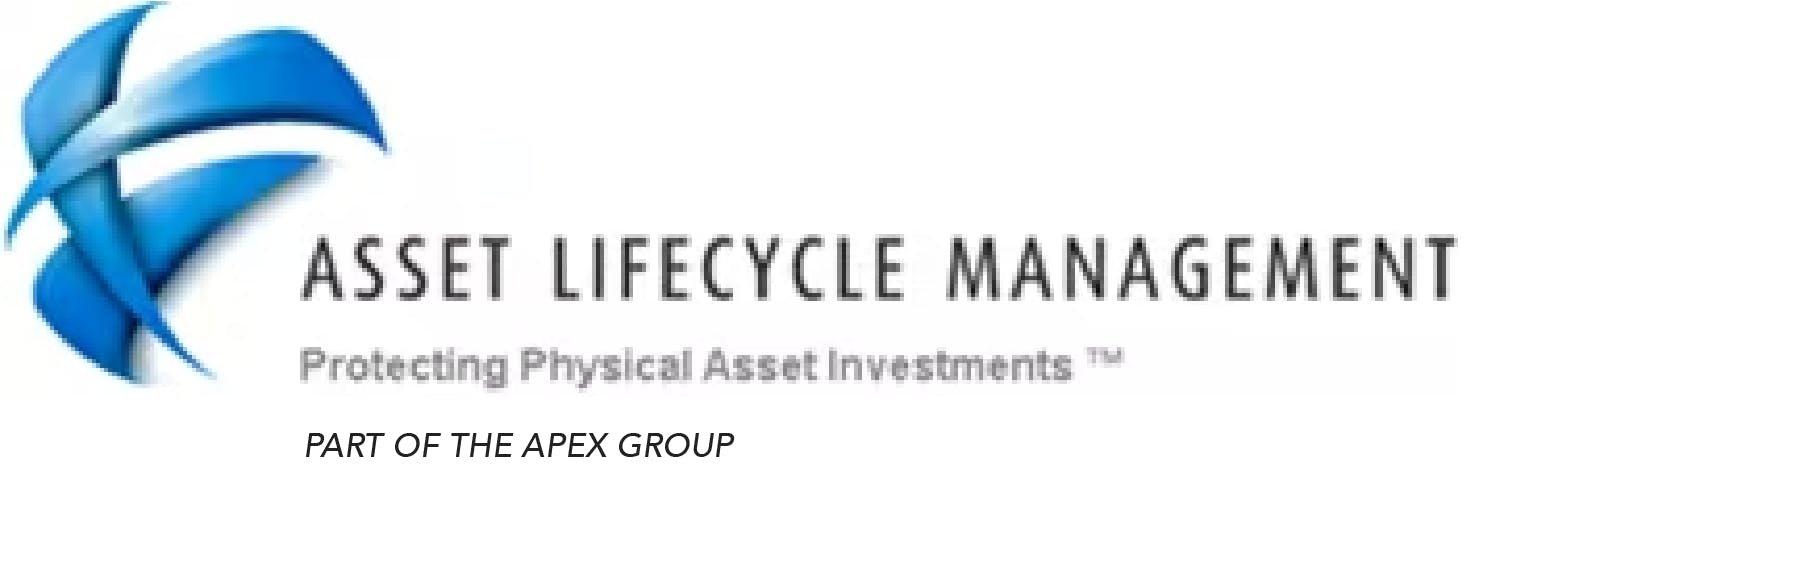 Asset Lifecycle Management Ltd